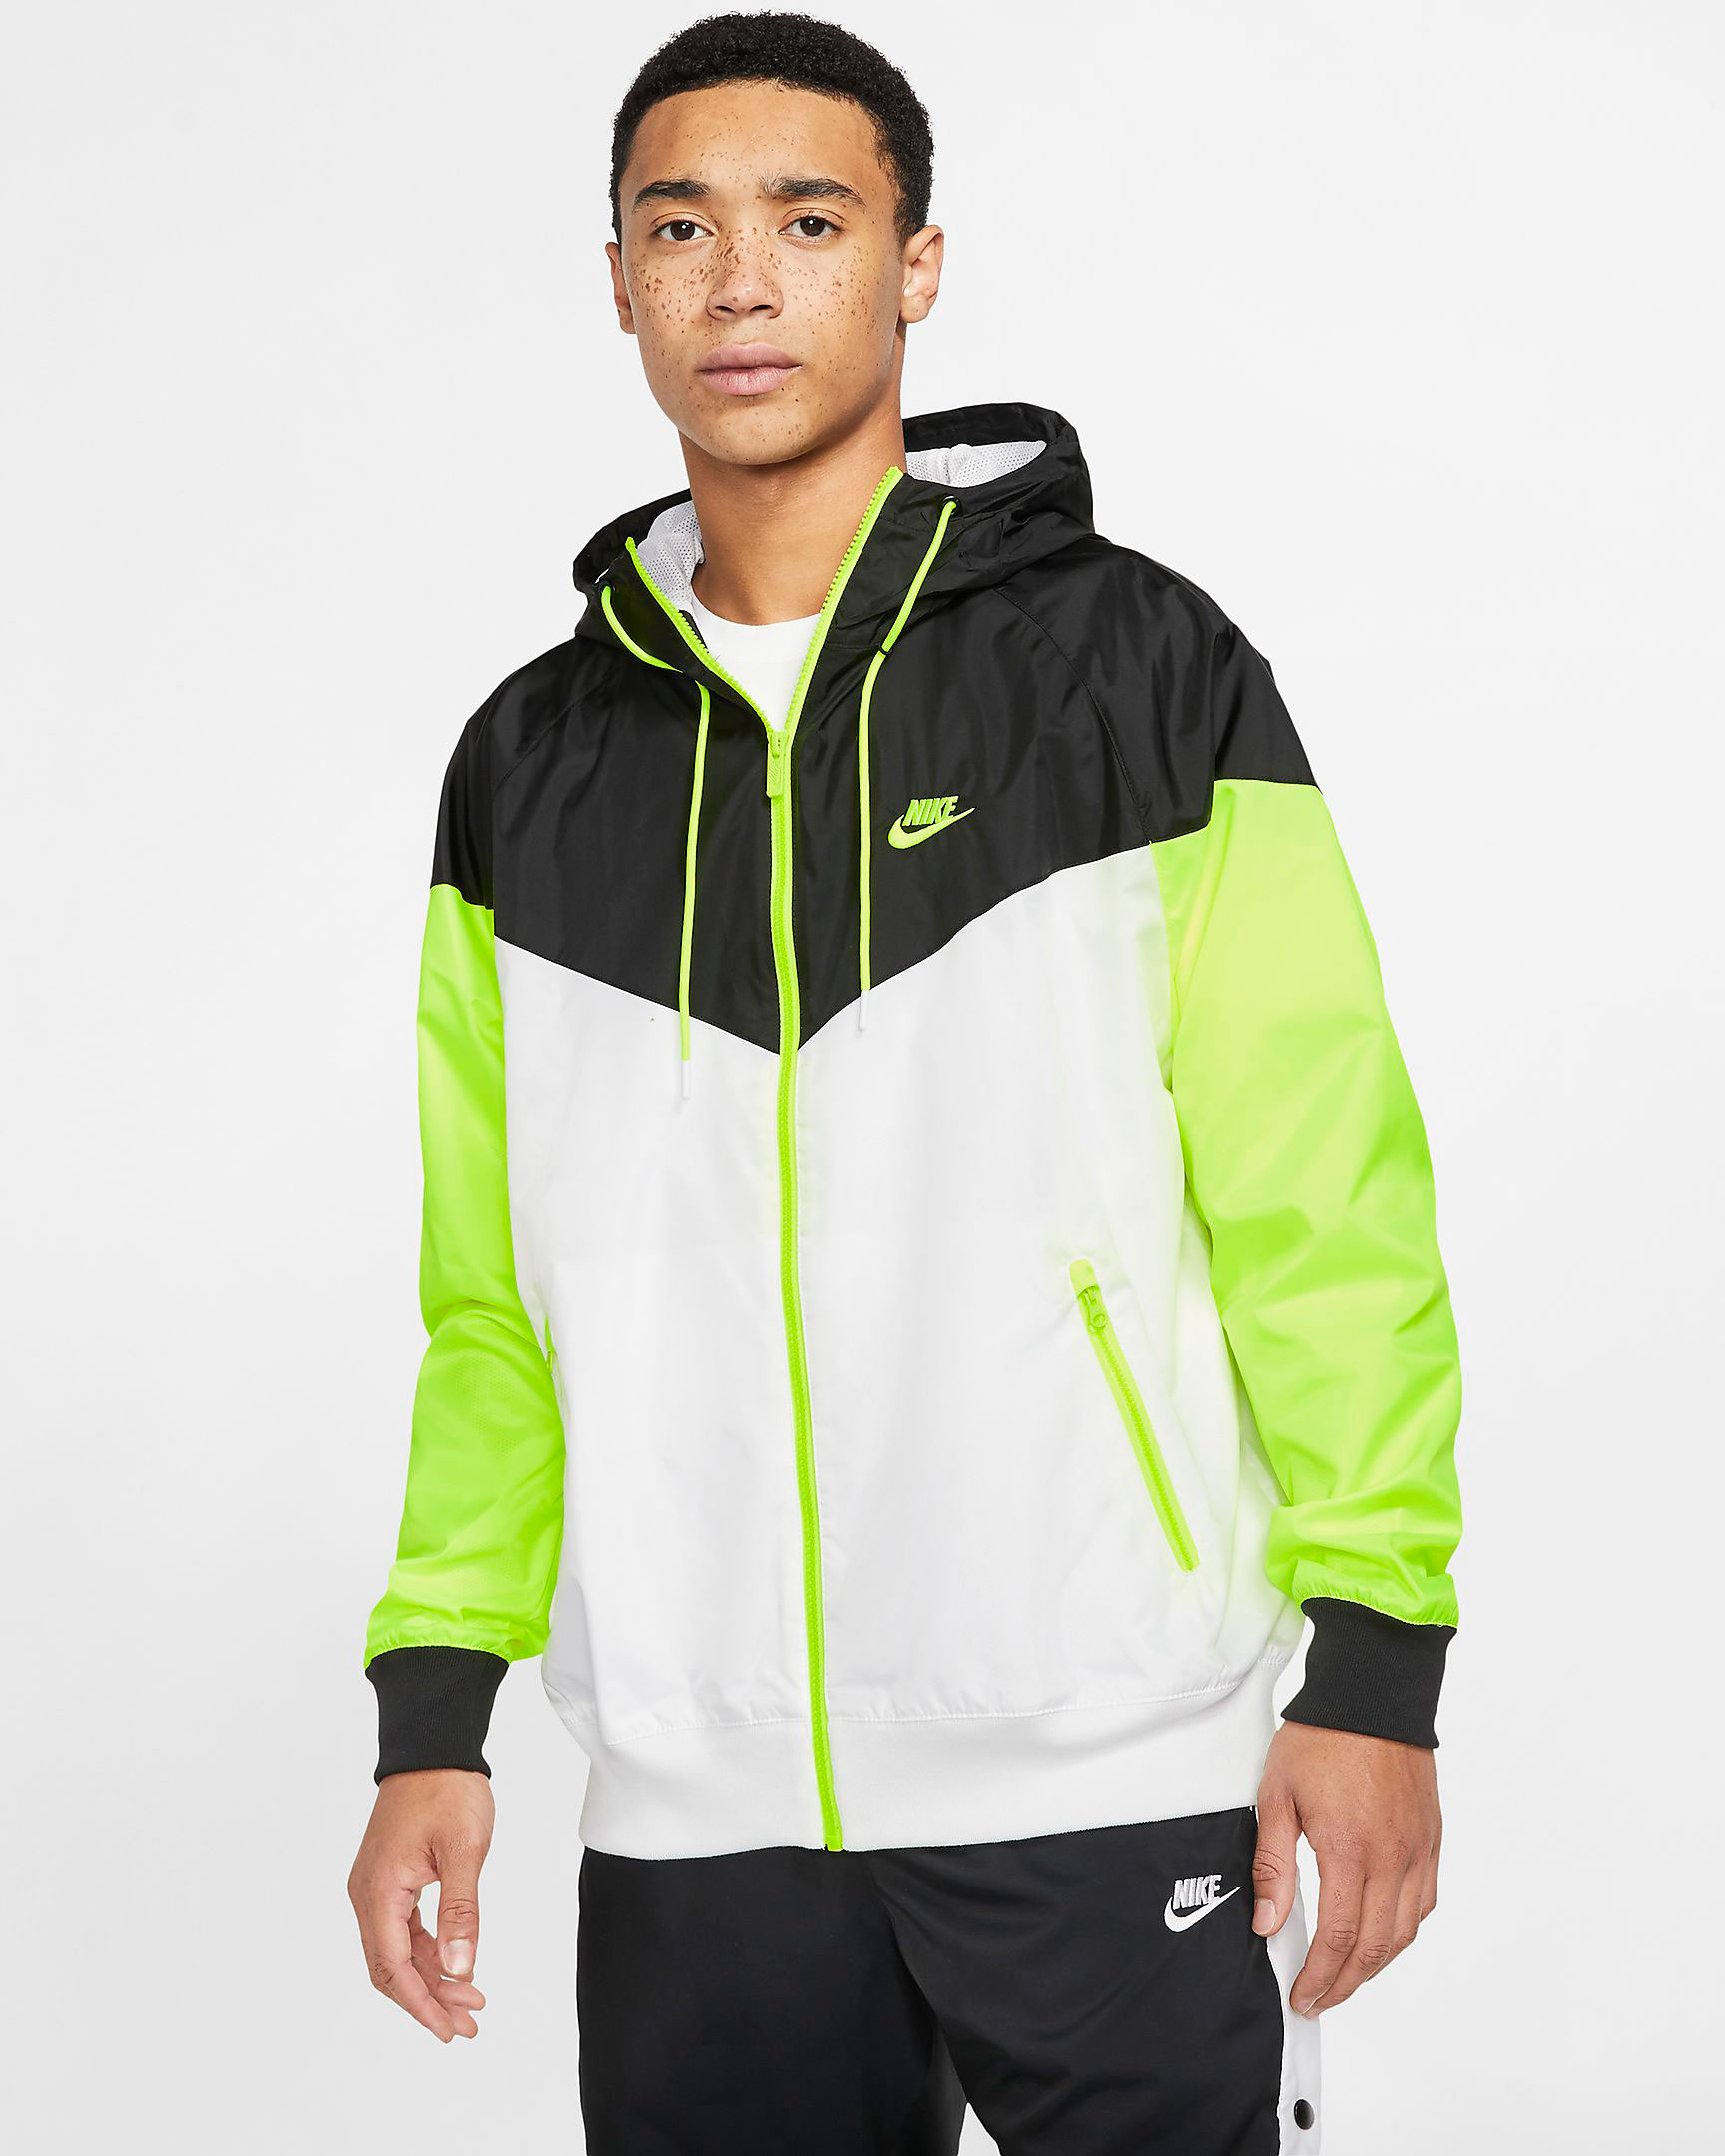 Air Jordan 4 Neon Volt Nike Jacket 